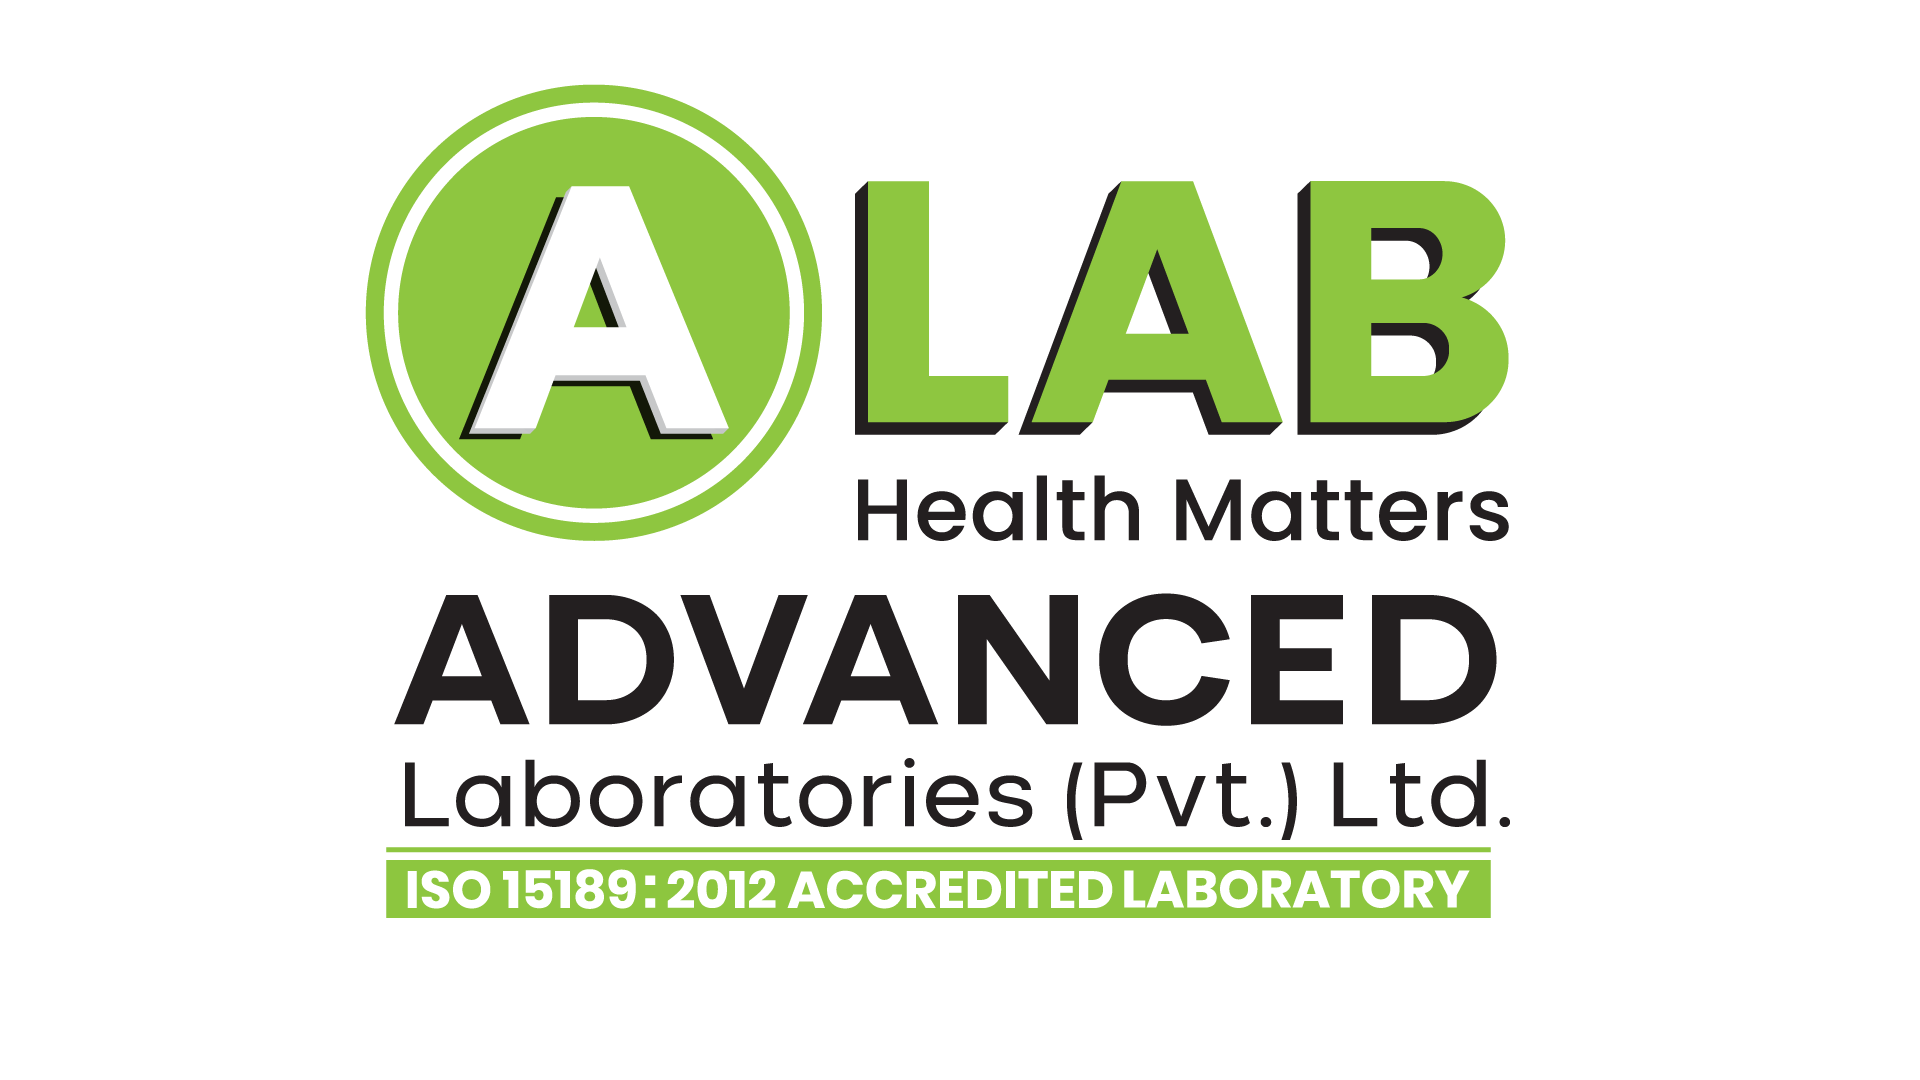 Advanced Lab